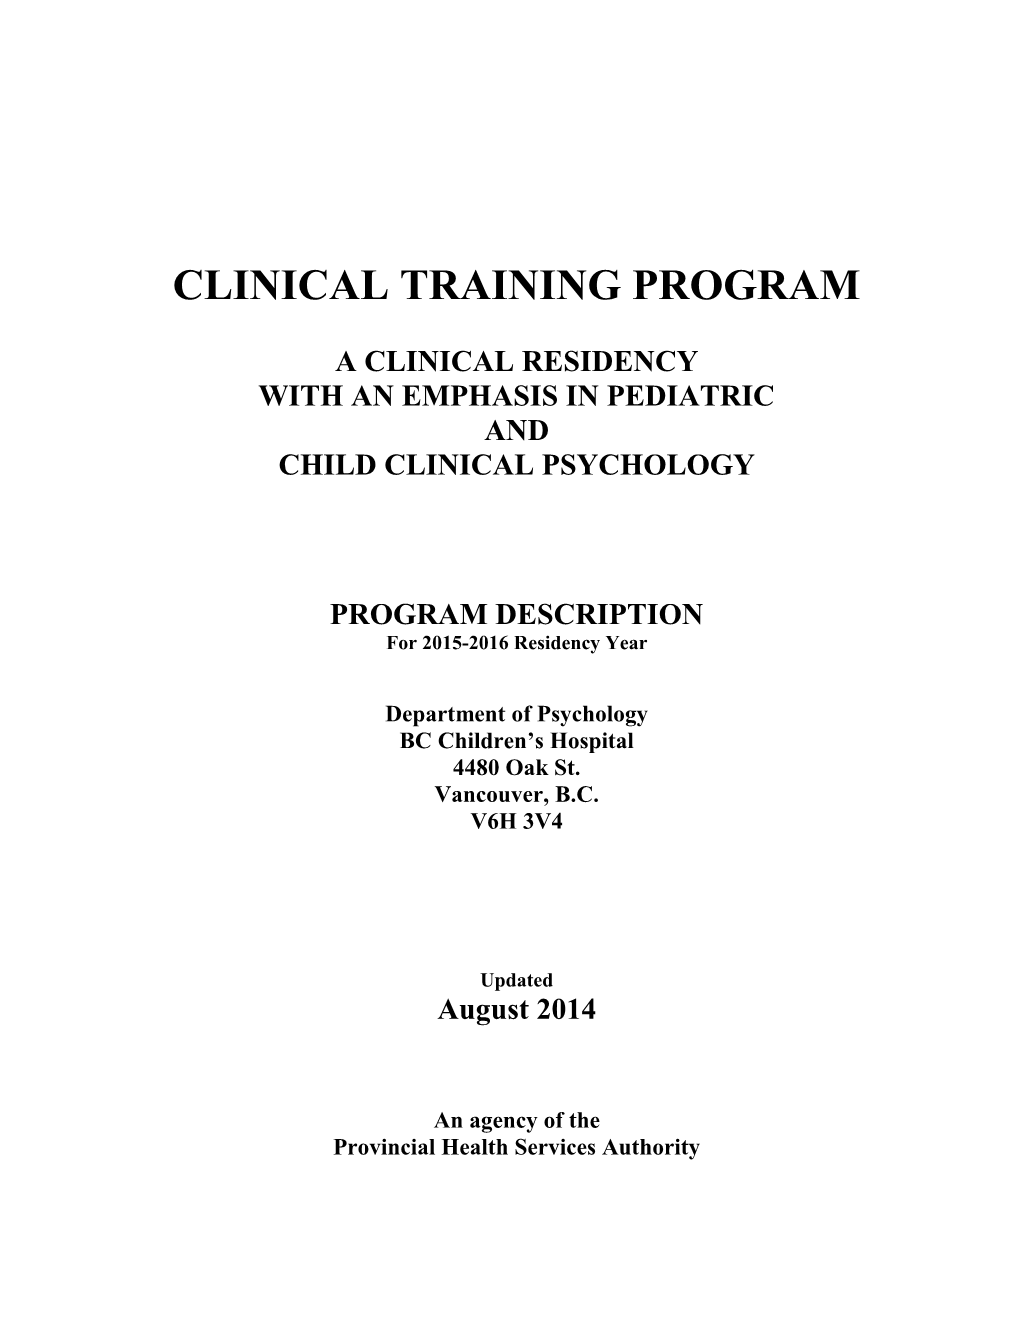 Clinical Training Program